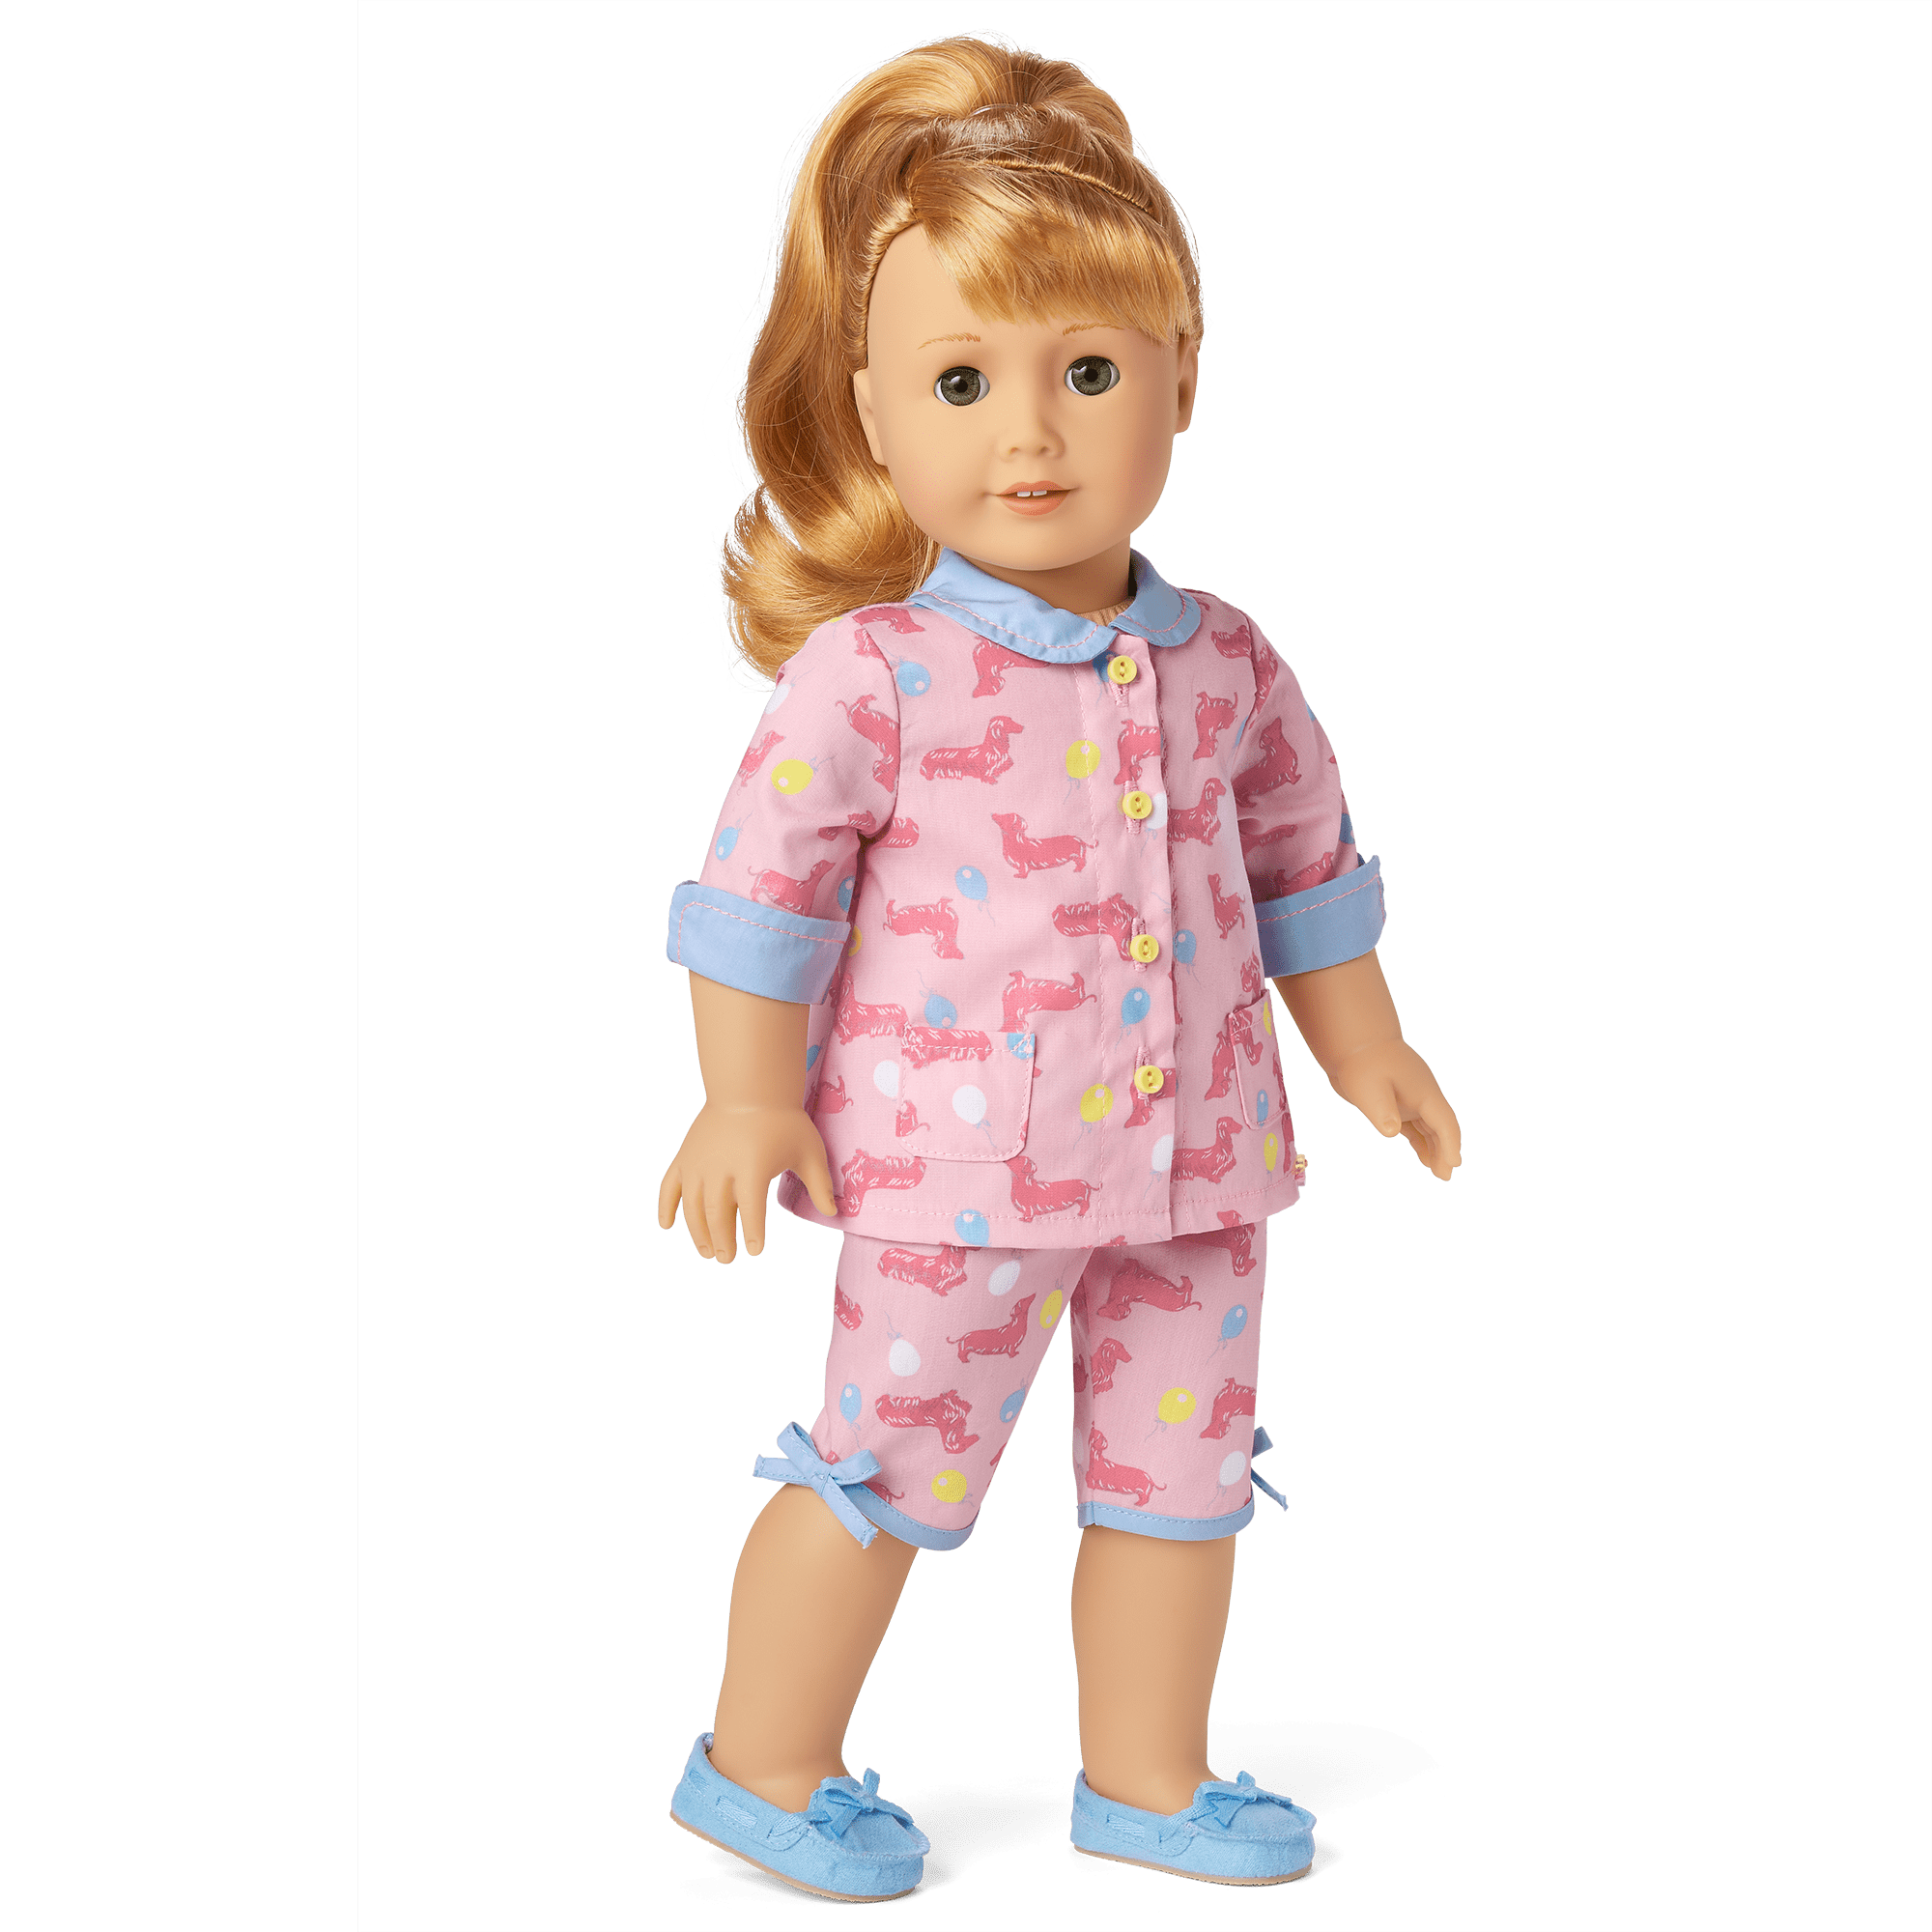 Maryellen’s™ Dachshund Pajamas for 18-inch Dolls | American Girl®